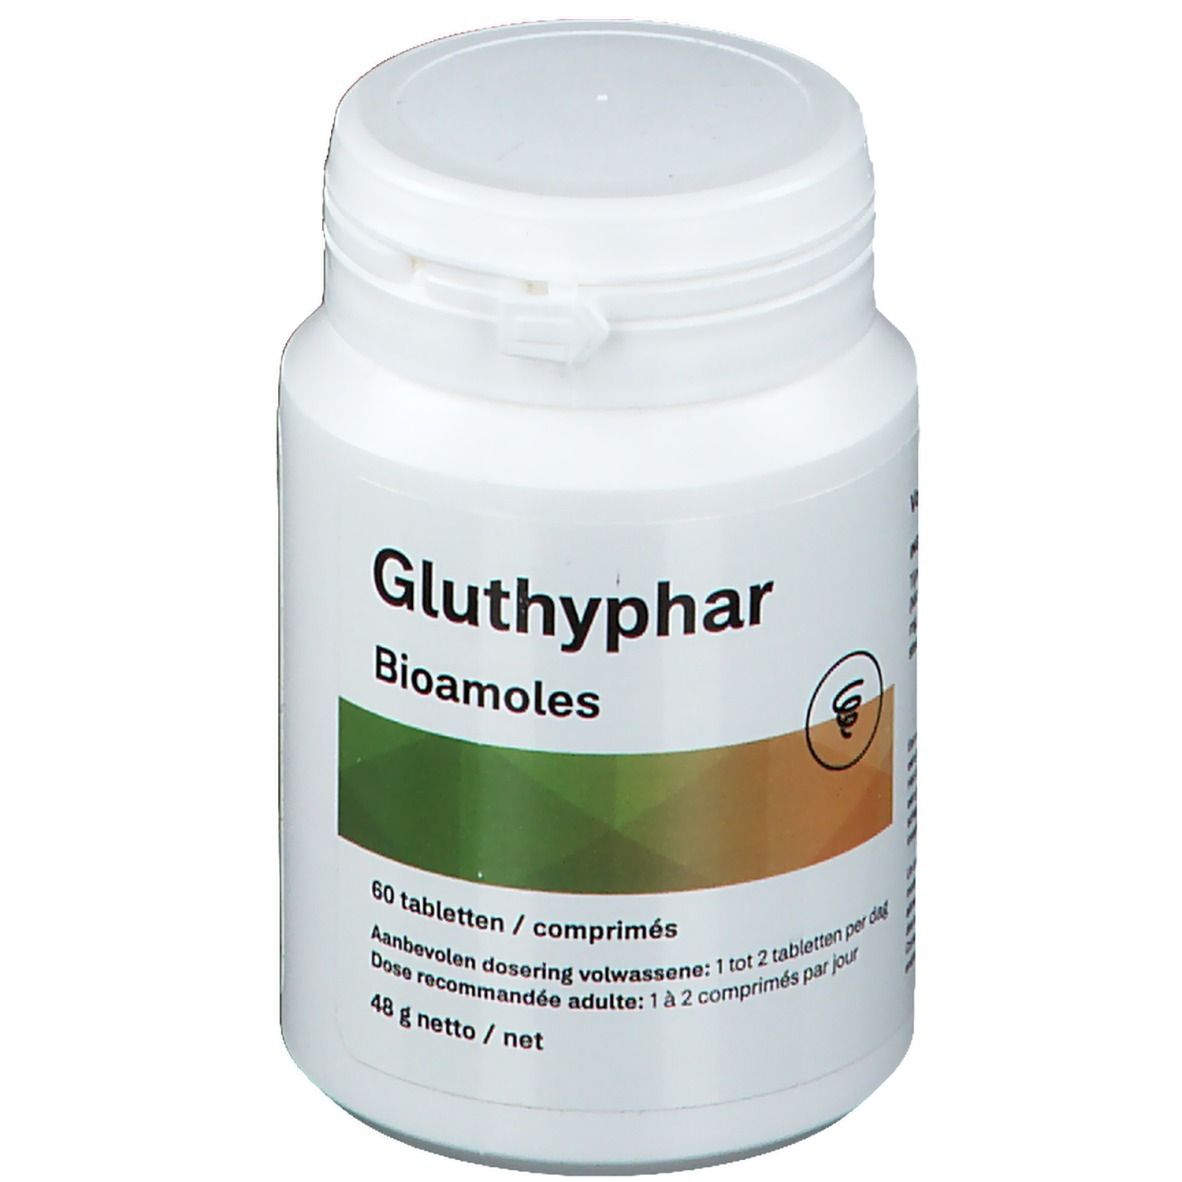 Image of Bioamoles Gluthyphar